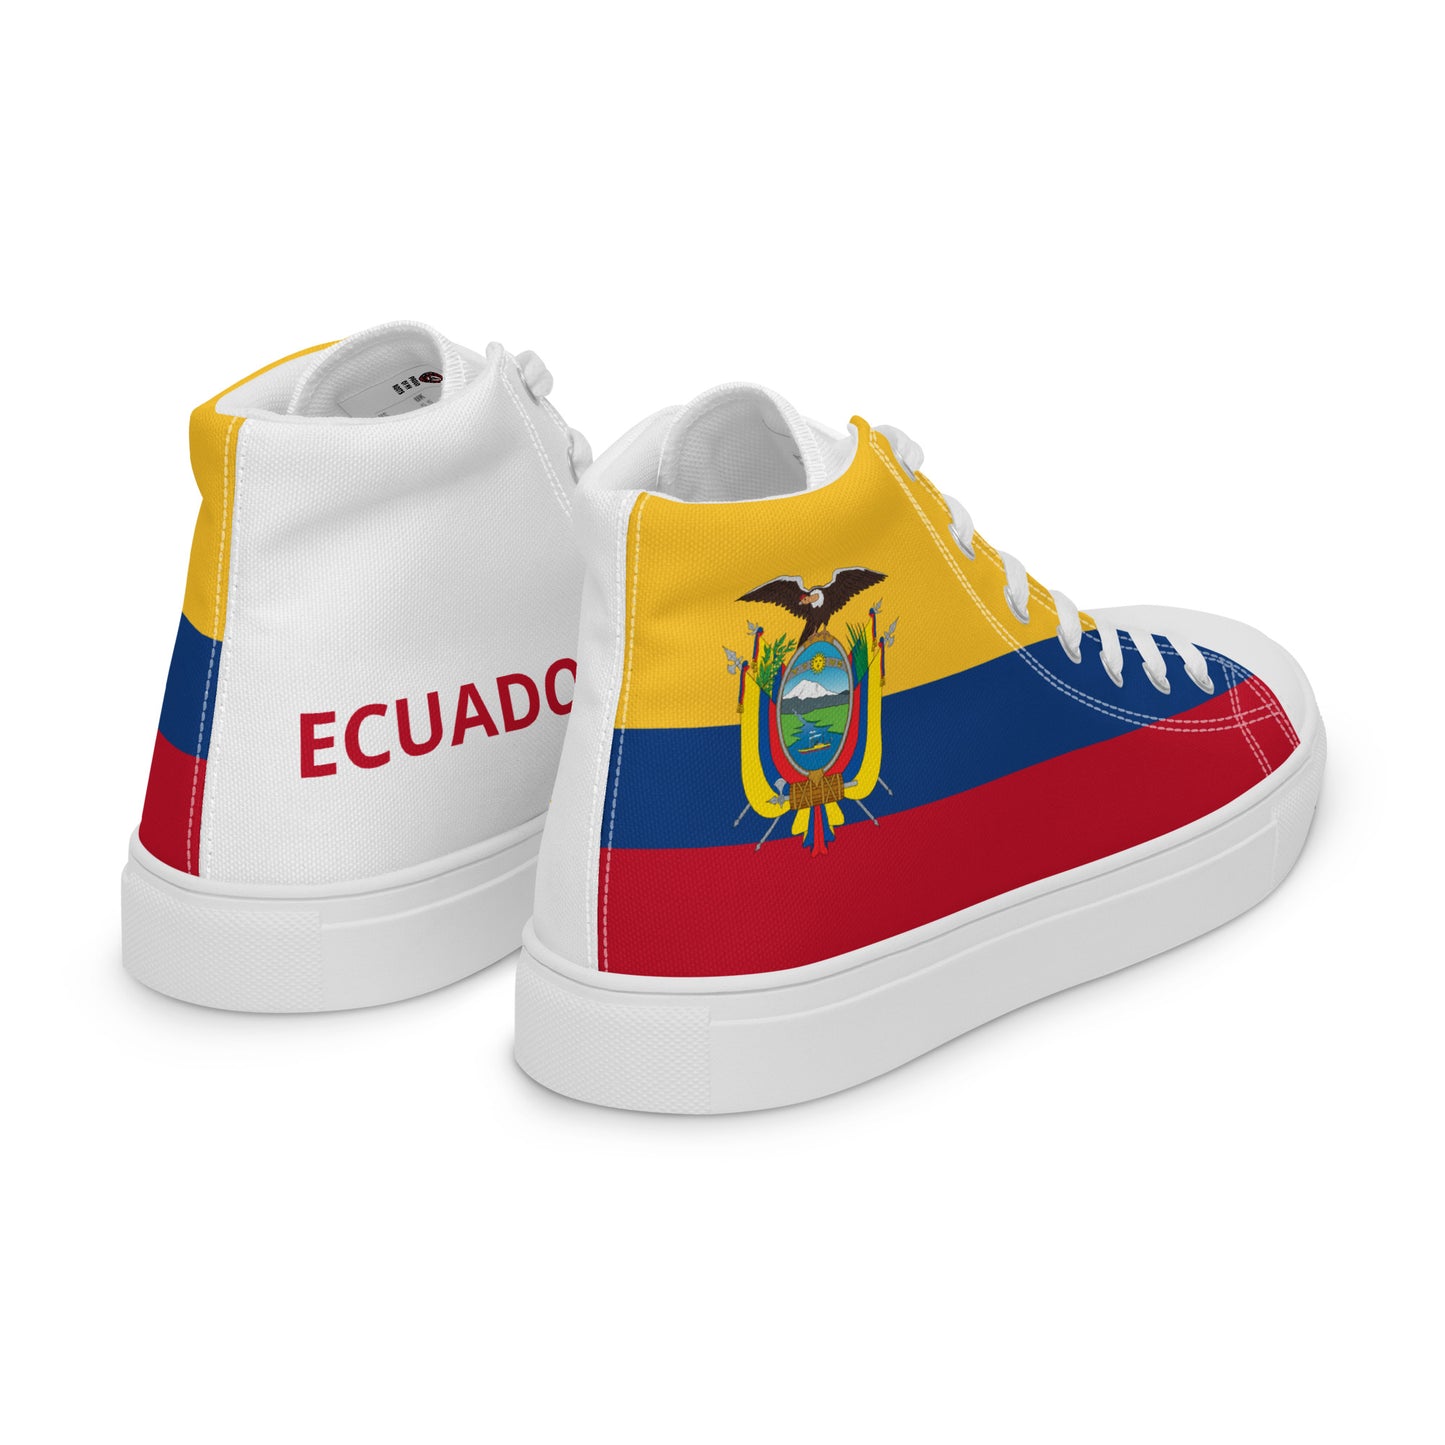 Ecuador - Men - Bandera - High top shoes